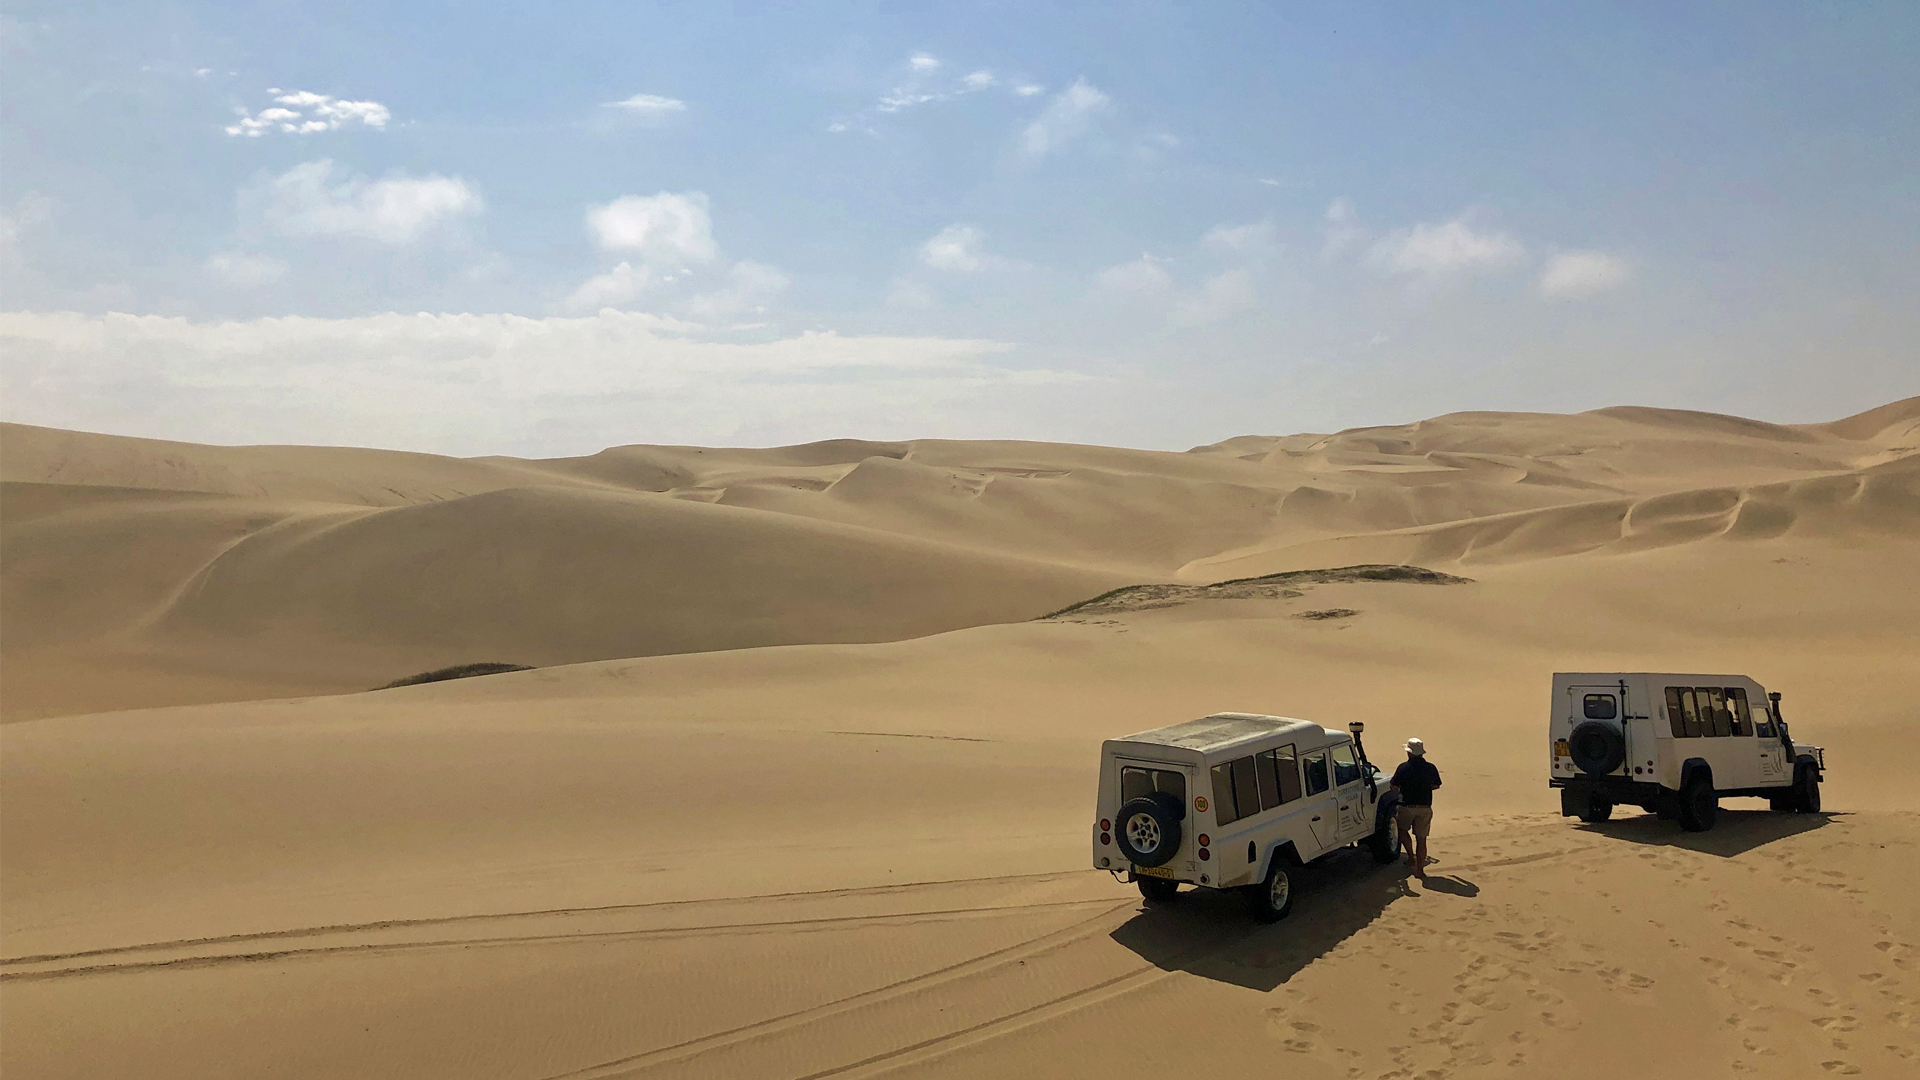 namibia regions SWAKOPMUND, WALVIS BAY AND THE COAST self-drive dunes